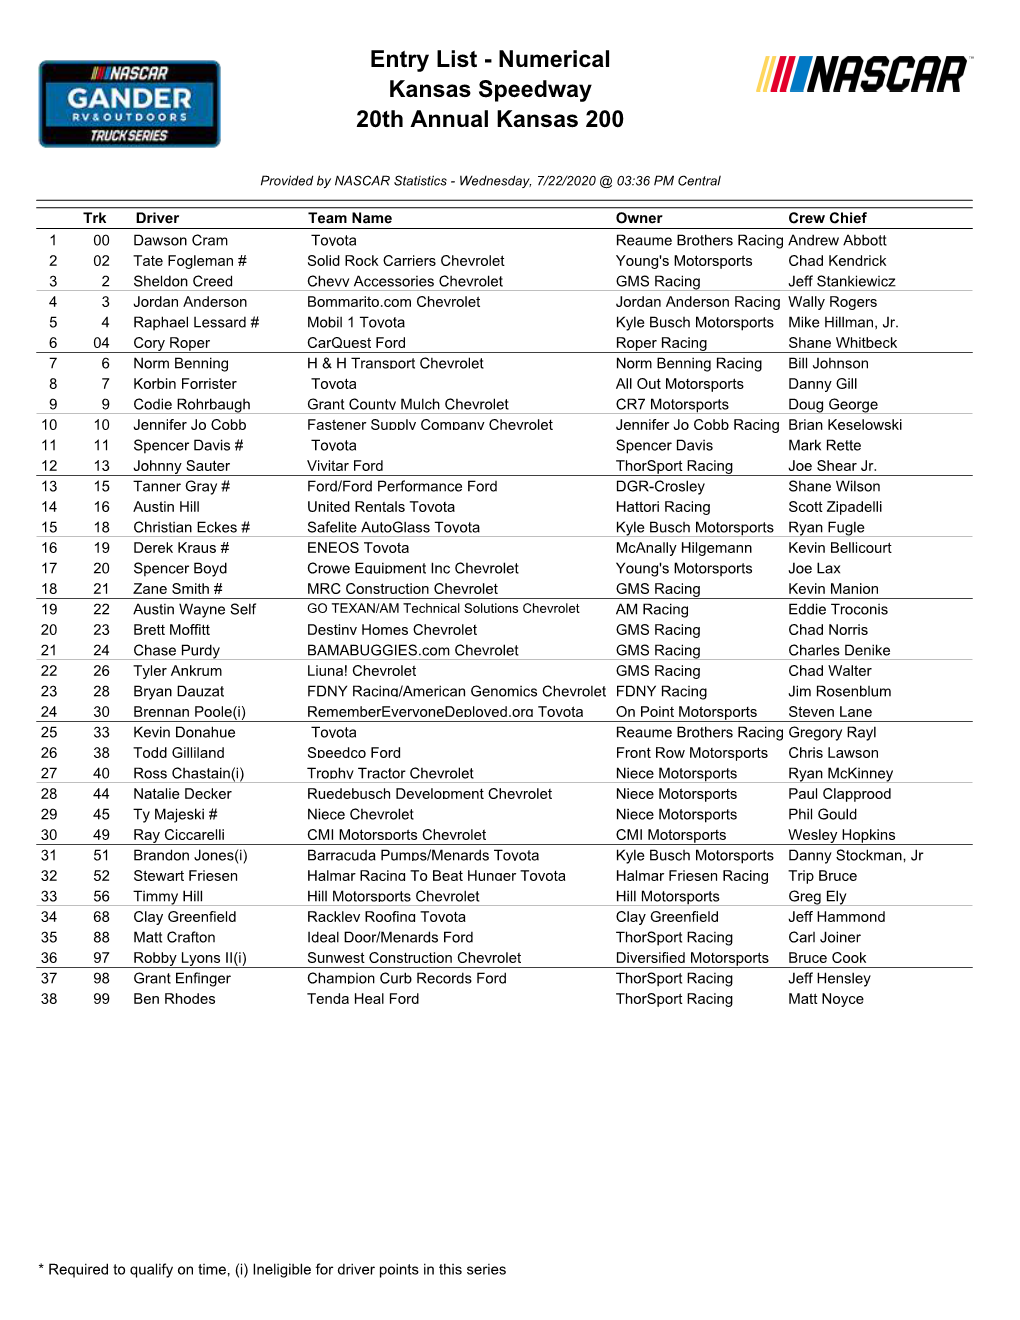 Entry List - Numerical Kansas Speedway 20Th Annual Kansas 200